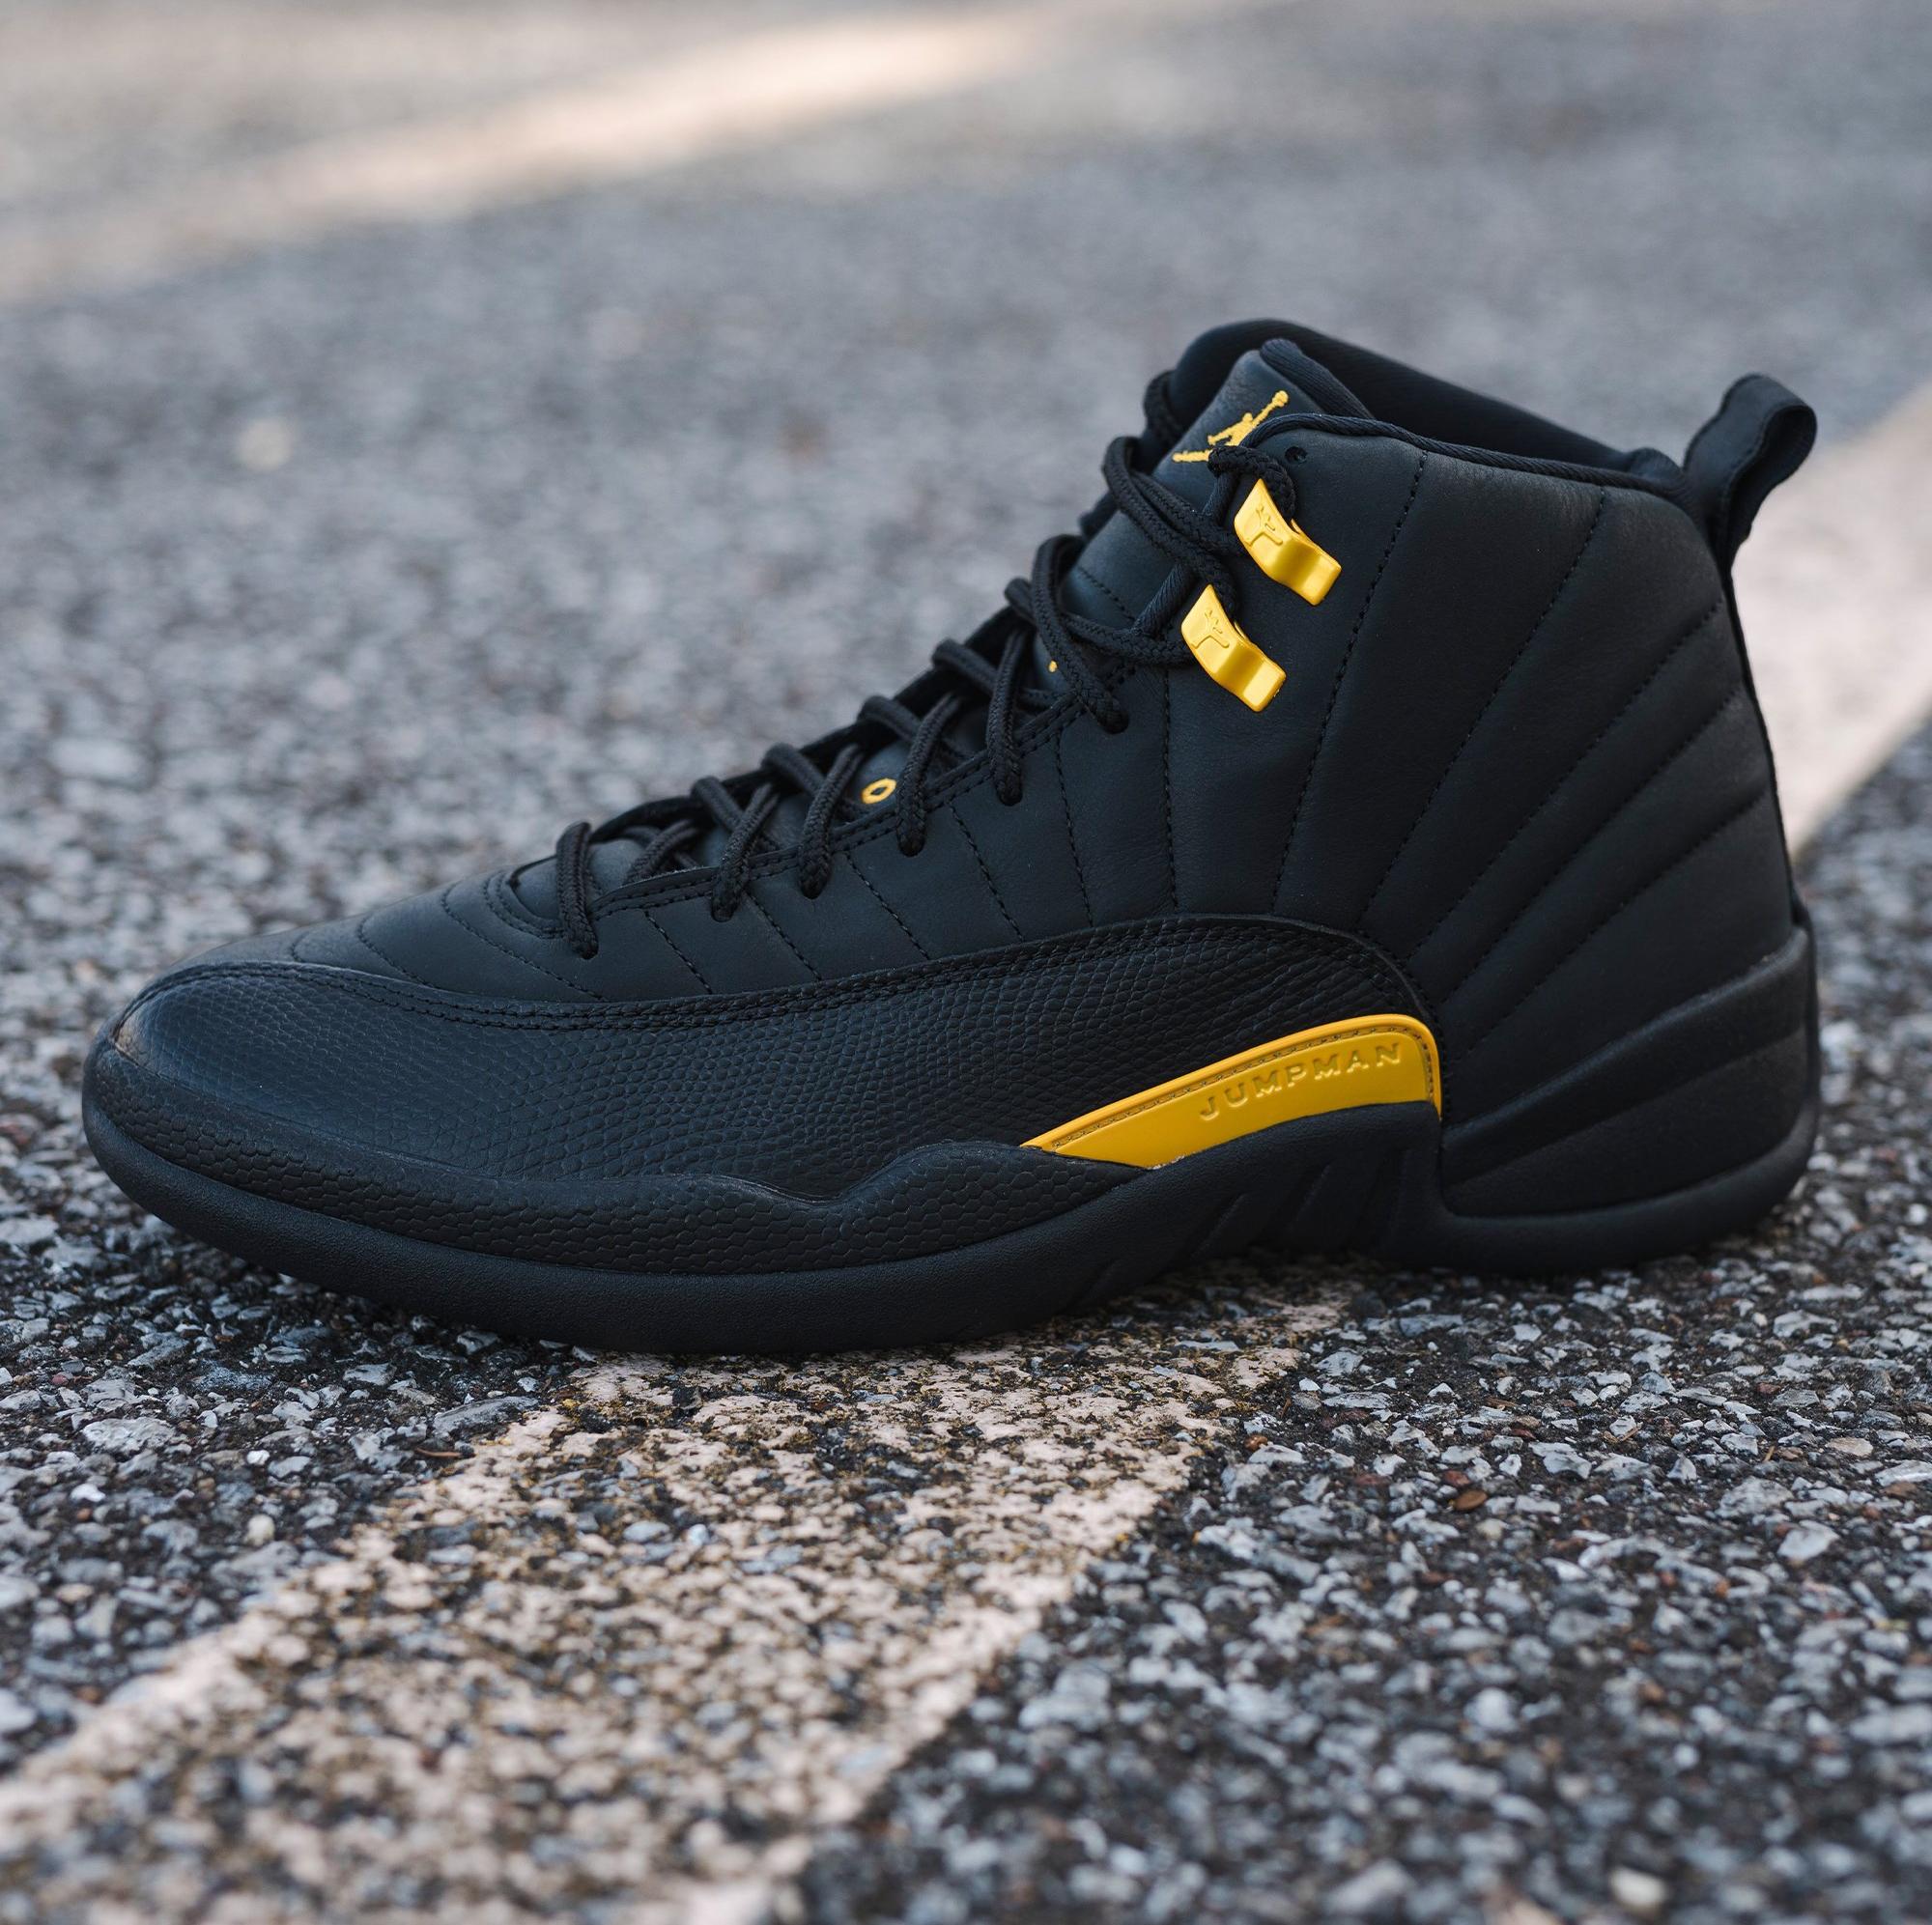 Sneakers Release – Jordan 12 Retro “Black/Taxi”  Men’s & Kids’ Shoe Launching 12/3